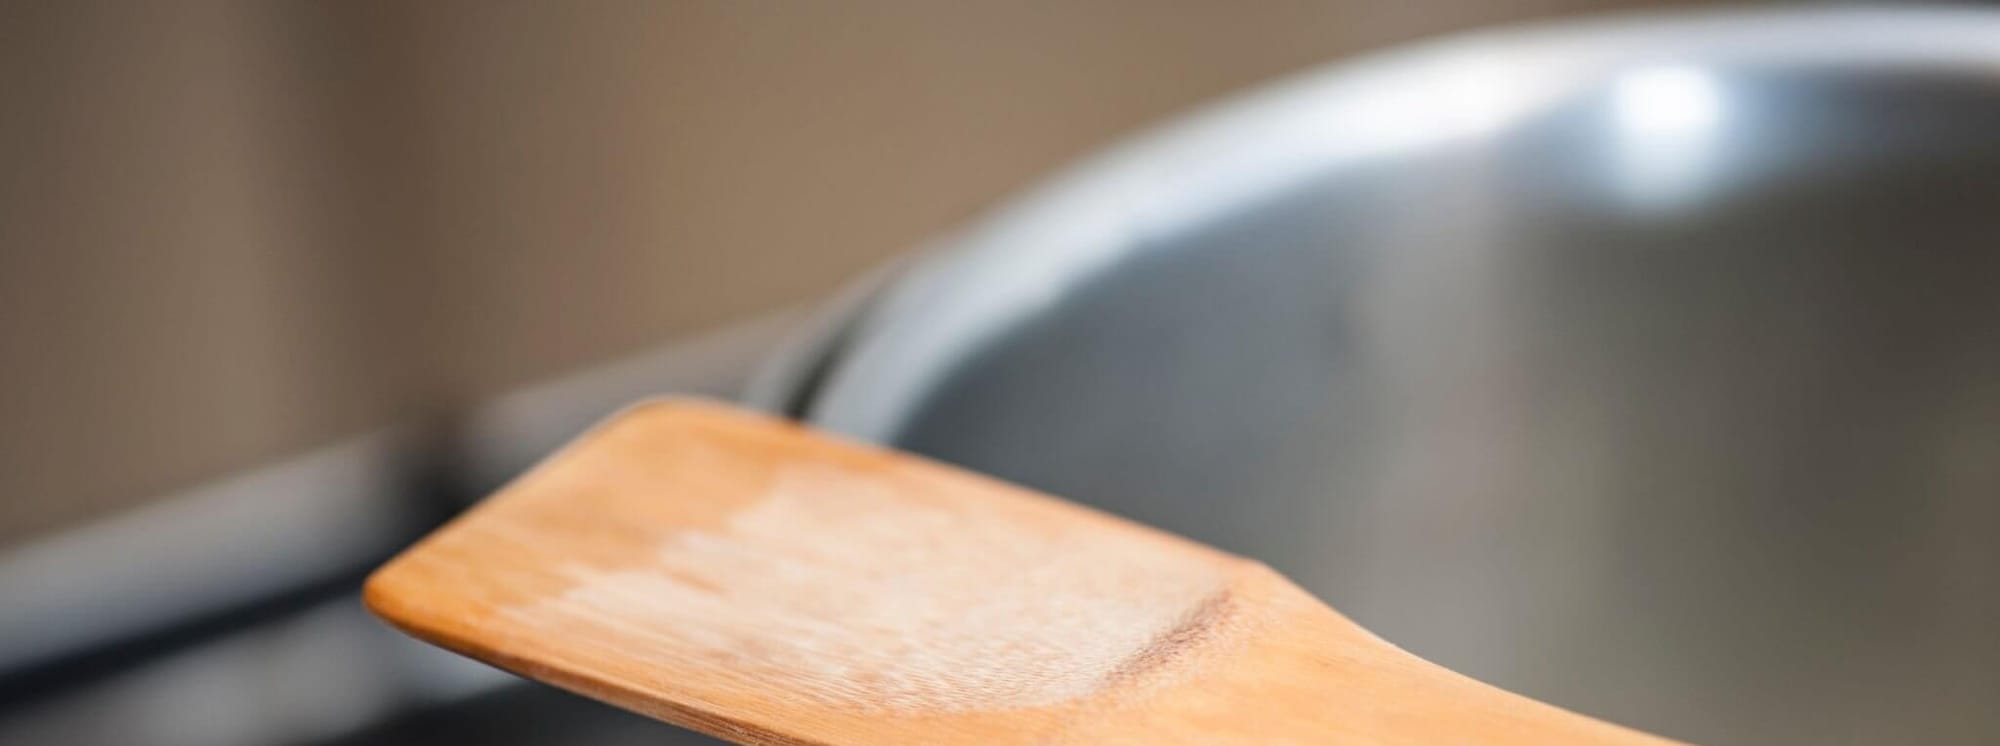 wooden spoon on pan